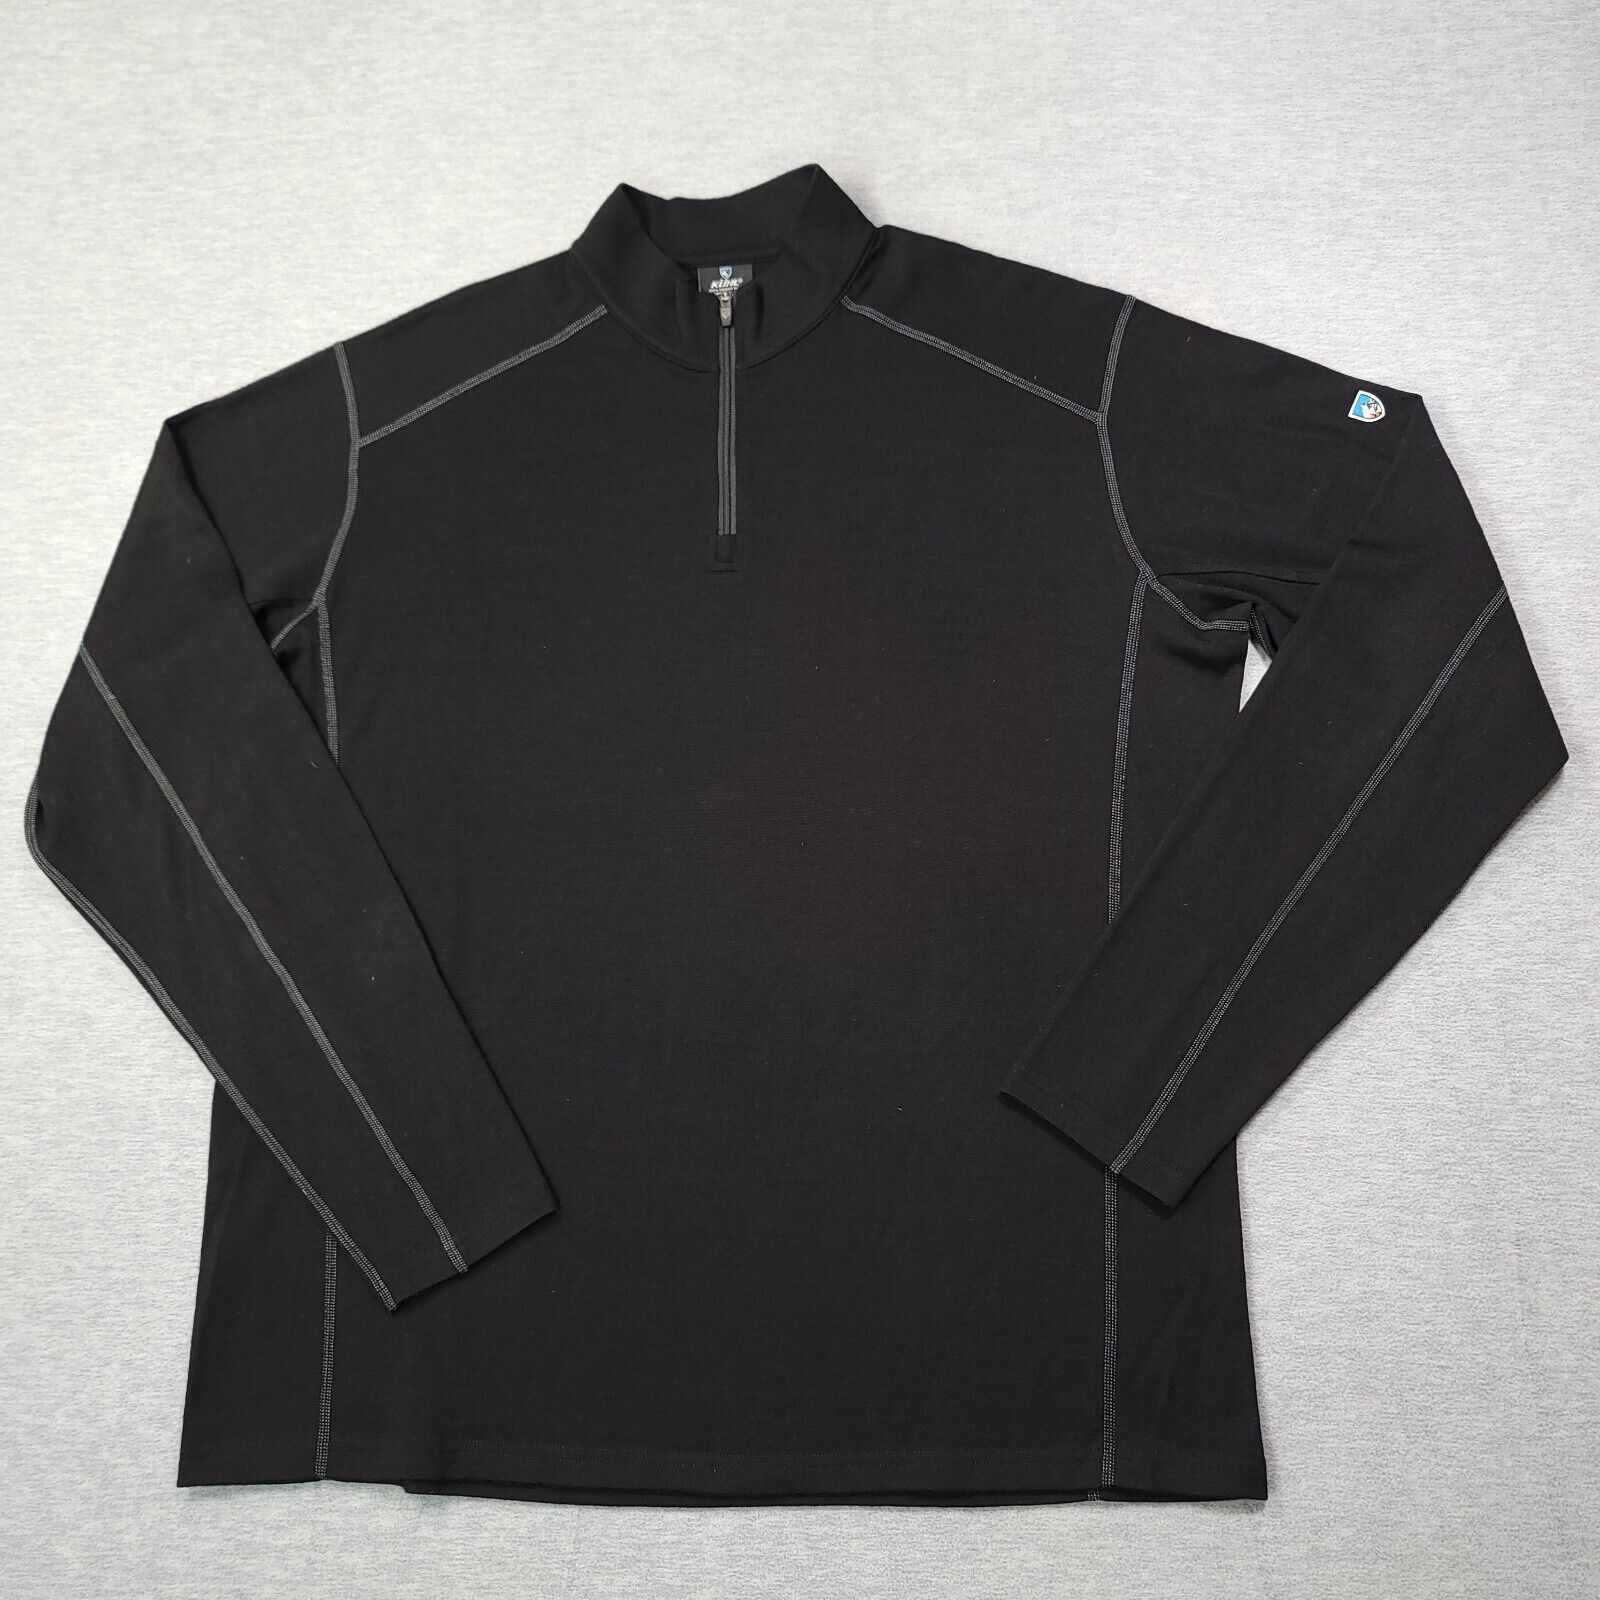 Kuhl Merino Wool Shirt Men’s XL Black 1/4 Zip Pullover Base Layer Thumb Holes